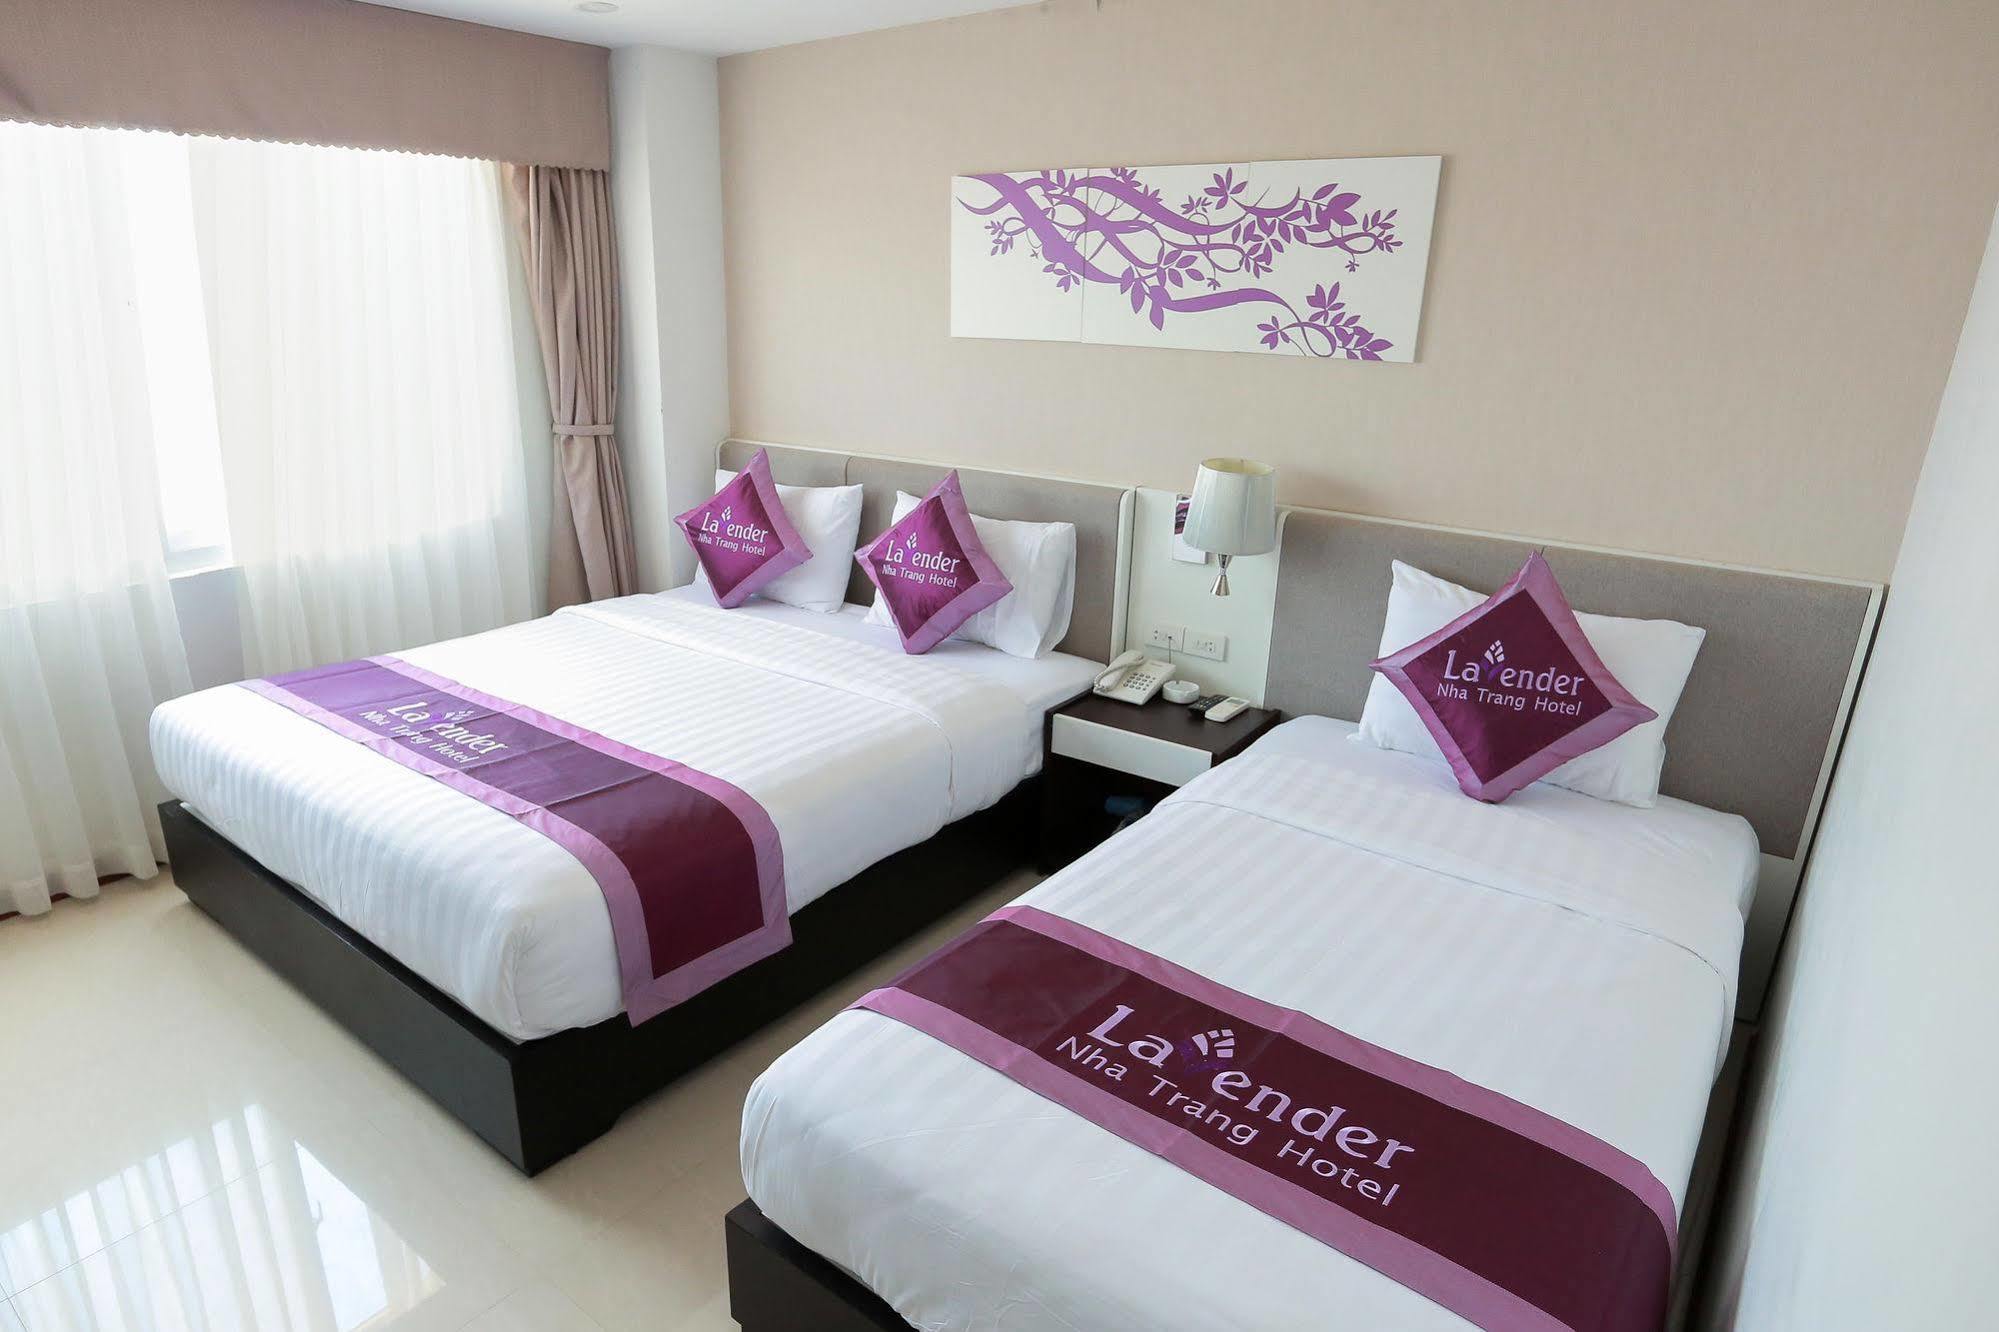 Lavender Nha Trang Hotel Exterior photo